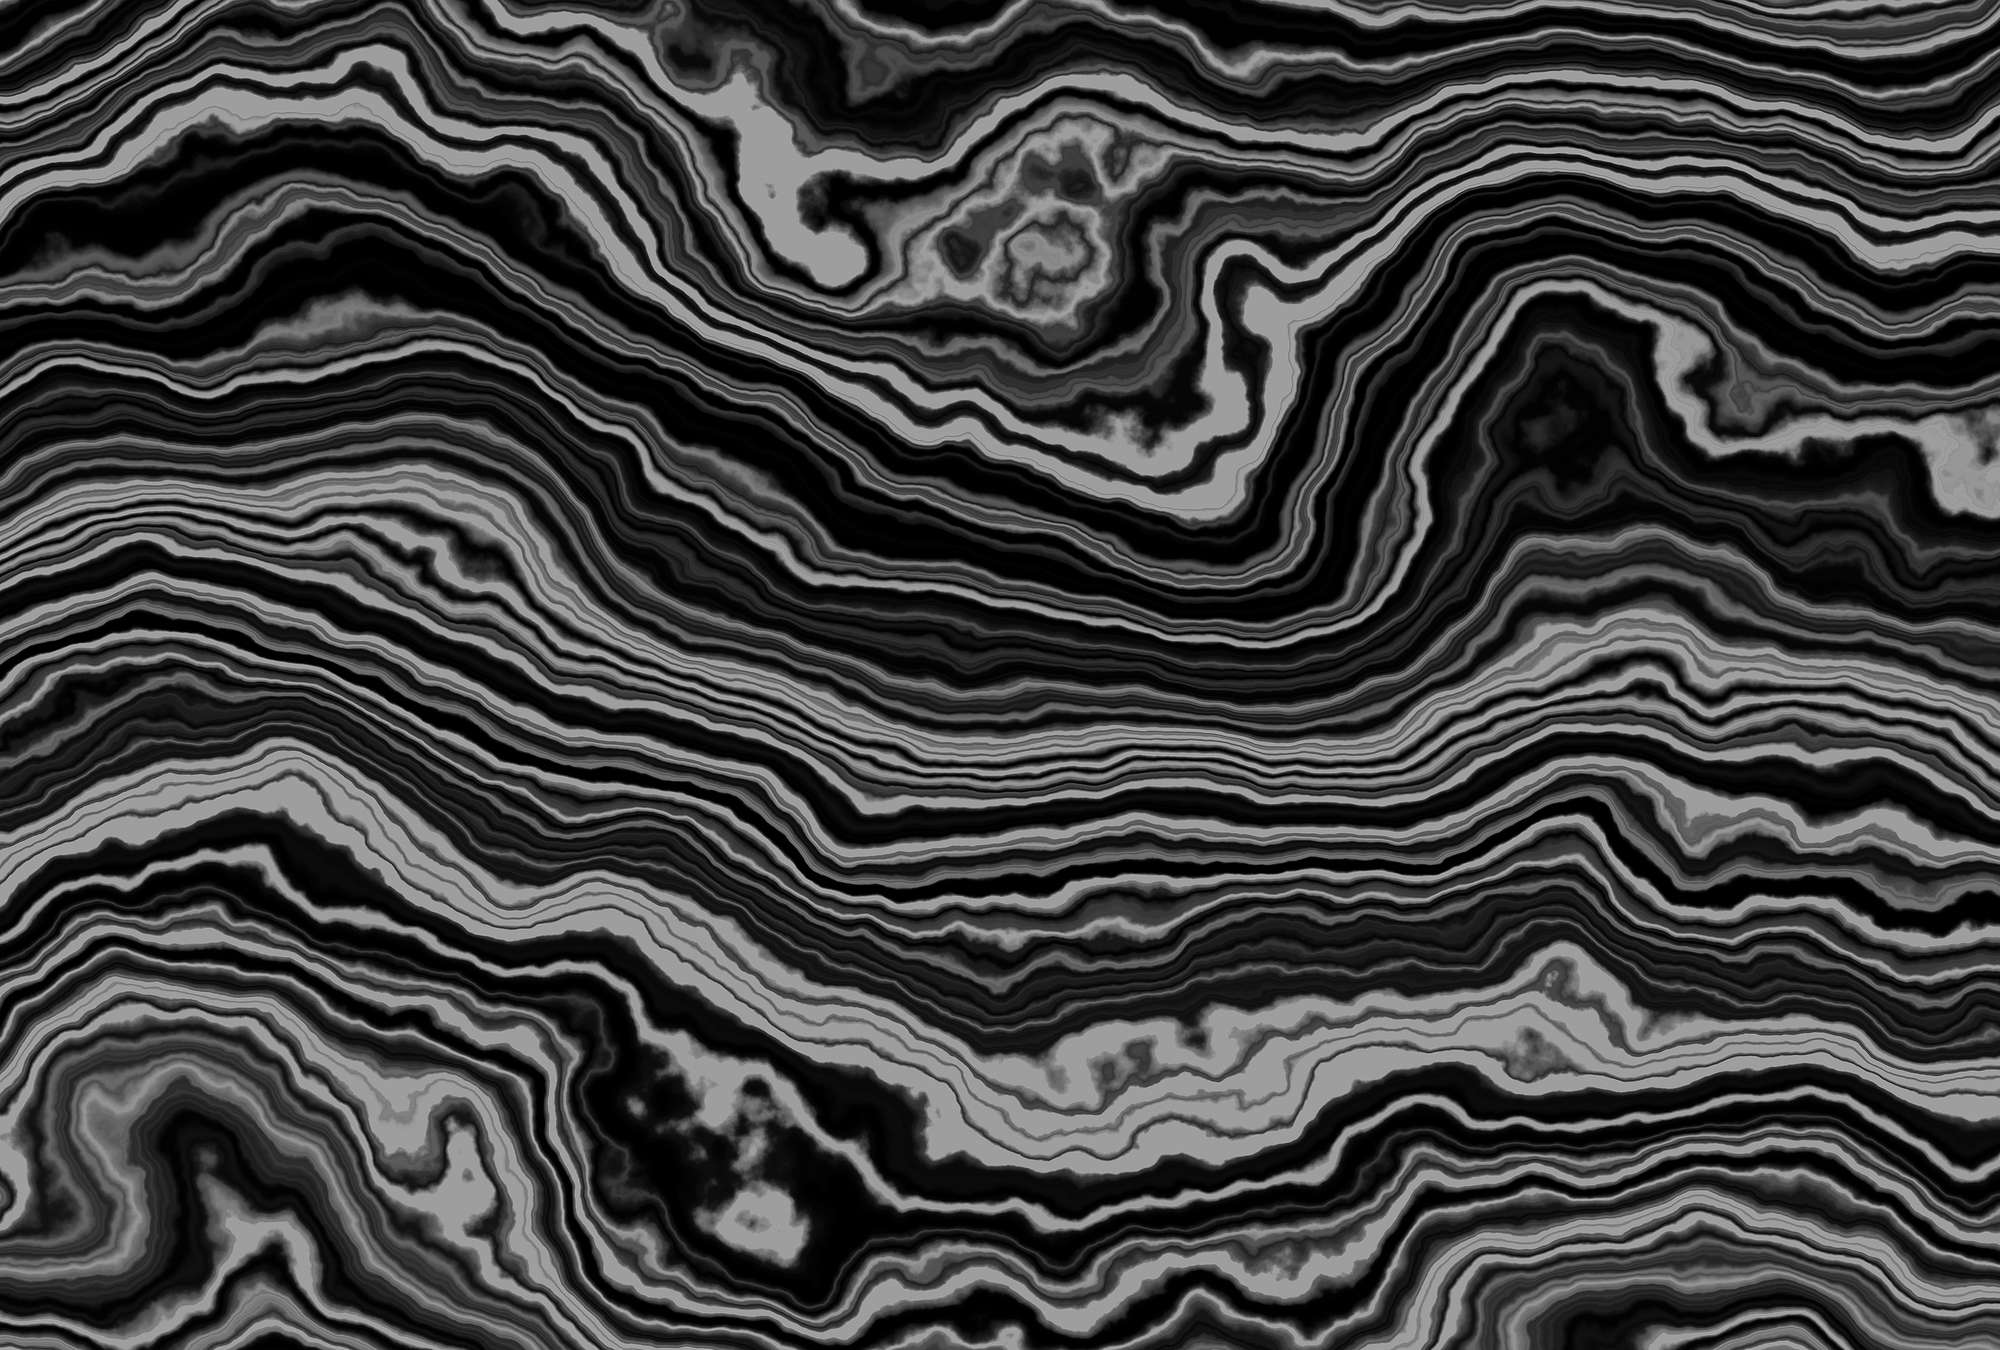             Onyx 1 - Cross section of an onyx marble as photo wallpaper - Black, White | Matt smooth fleece
        